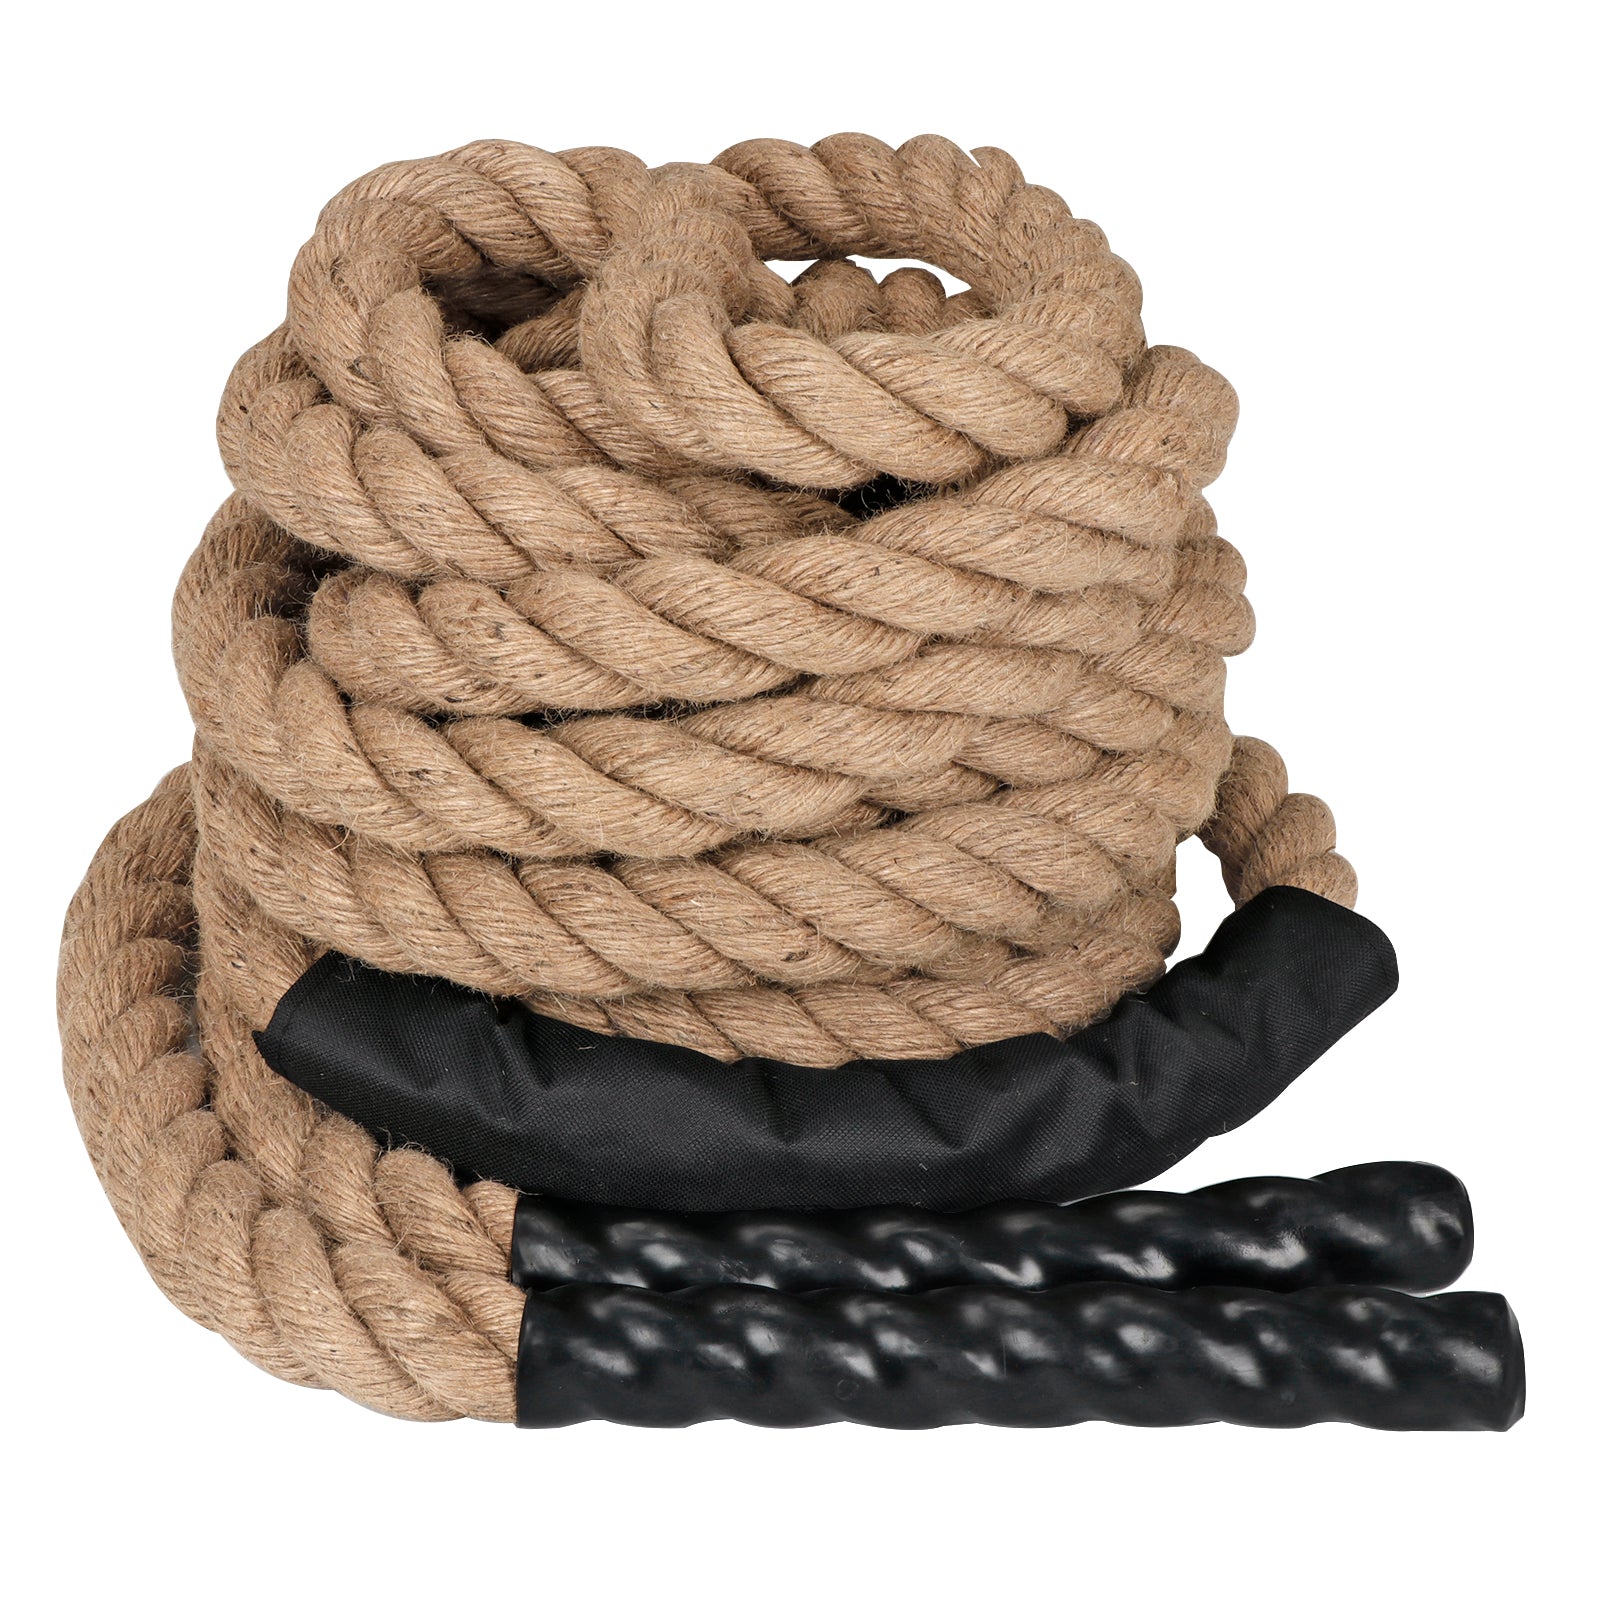 ZENY? Jute Rope 30 FT /40 FT Length Twisted Hemp Rope Workout Training Undulation Rope